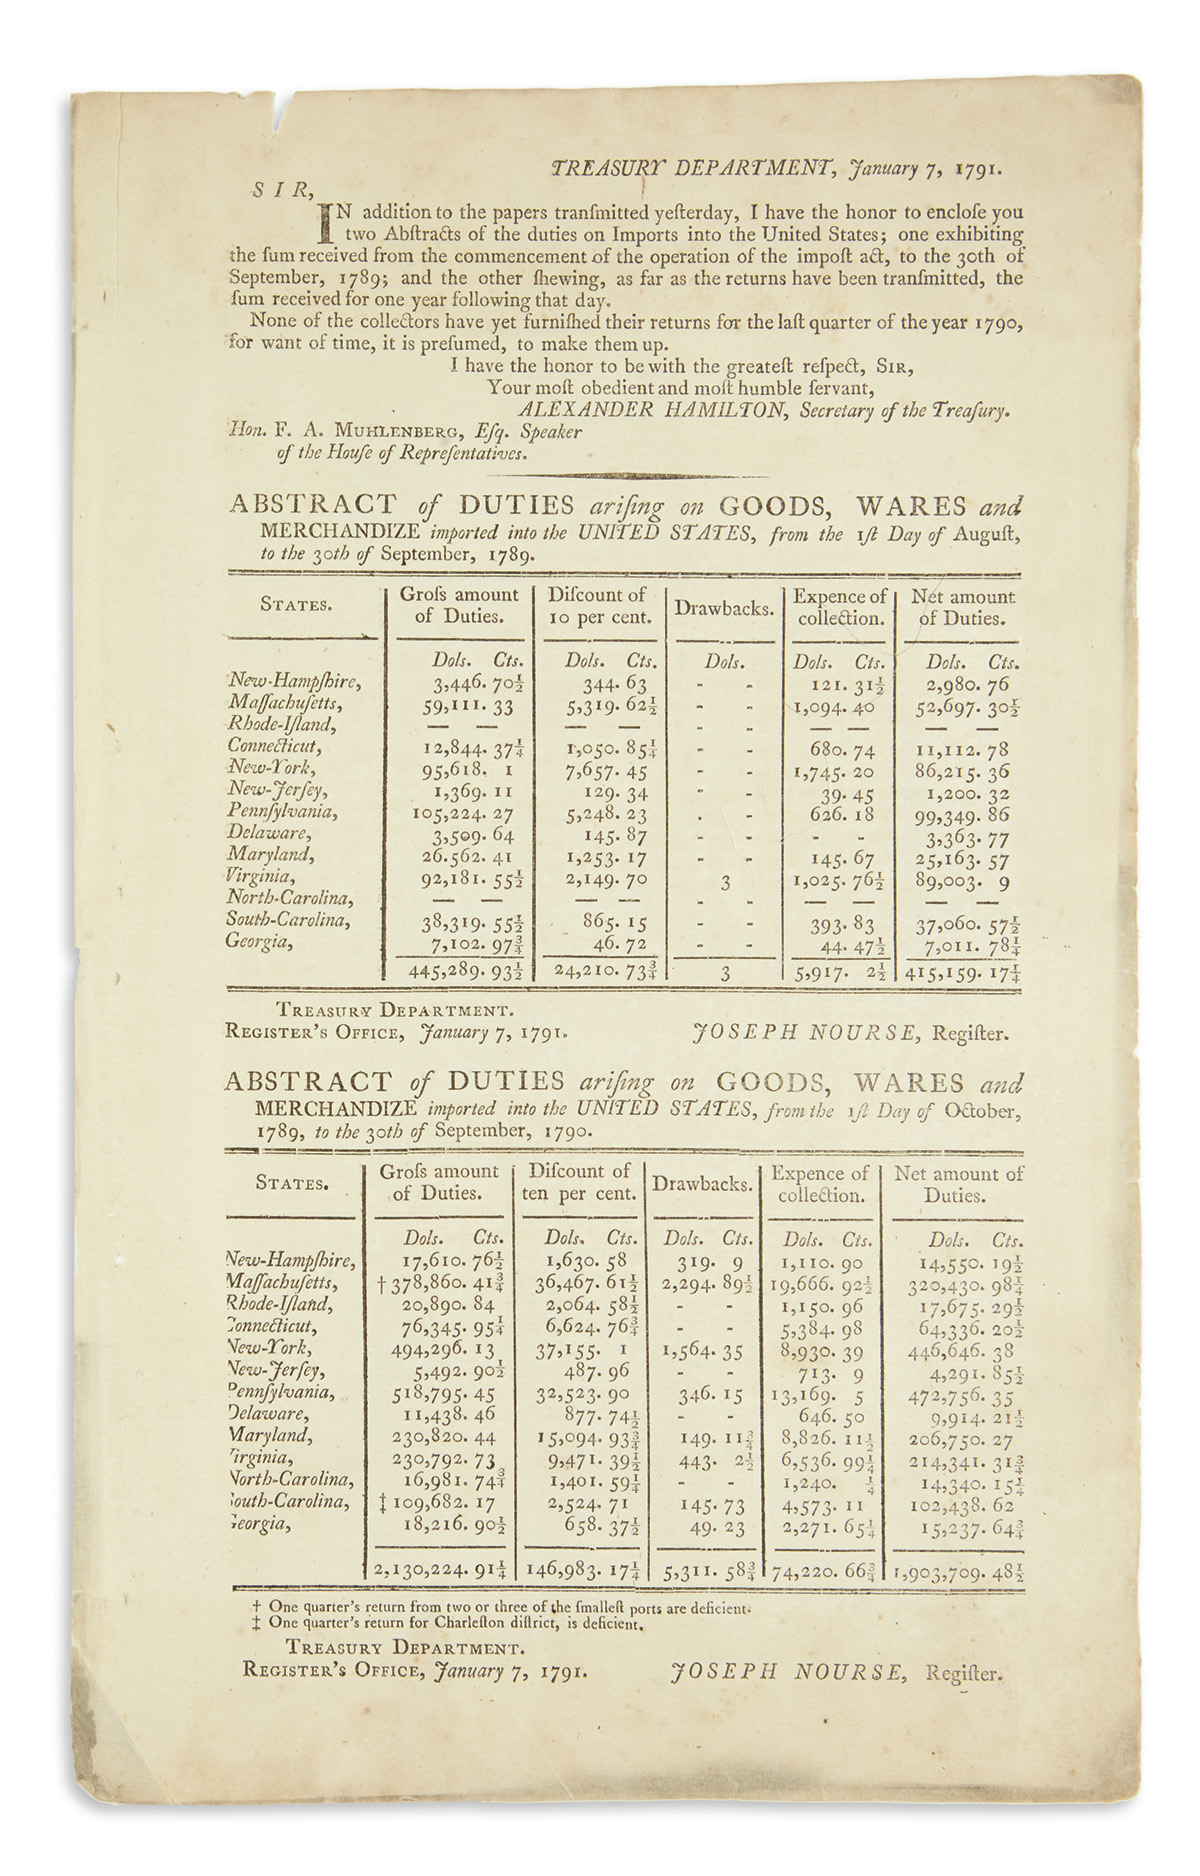 HAMILTON, ALEXANDER. Printed report on import duties, issued as Secretary of the Treasury.